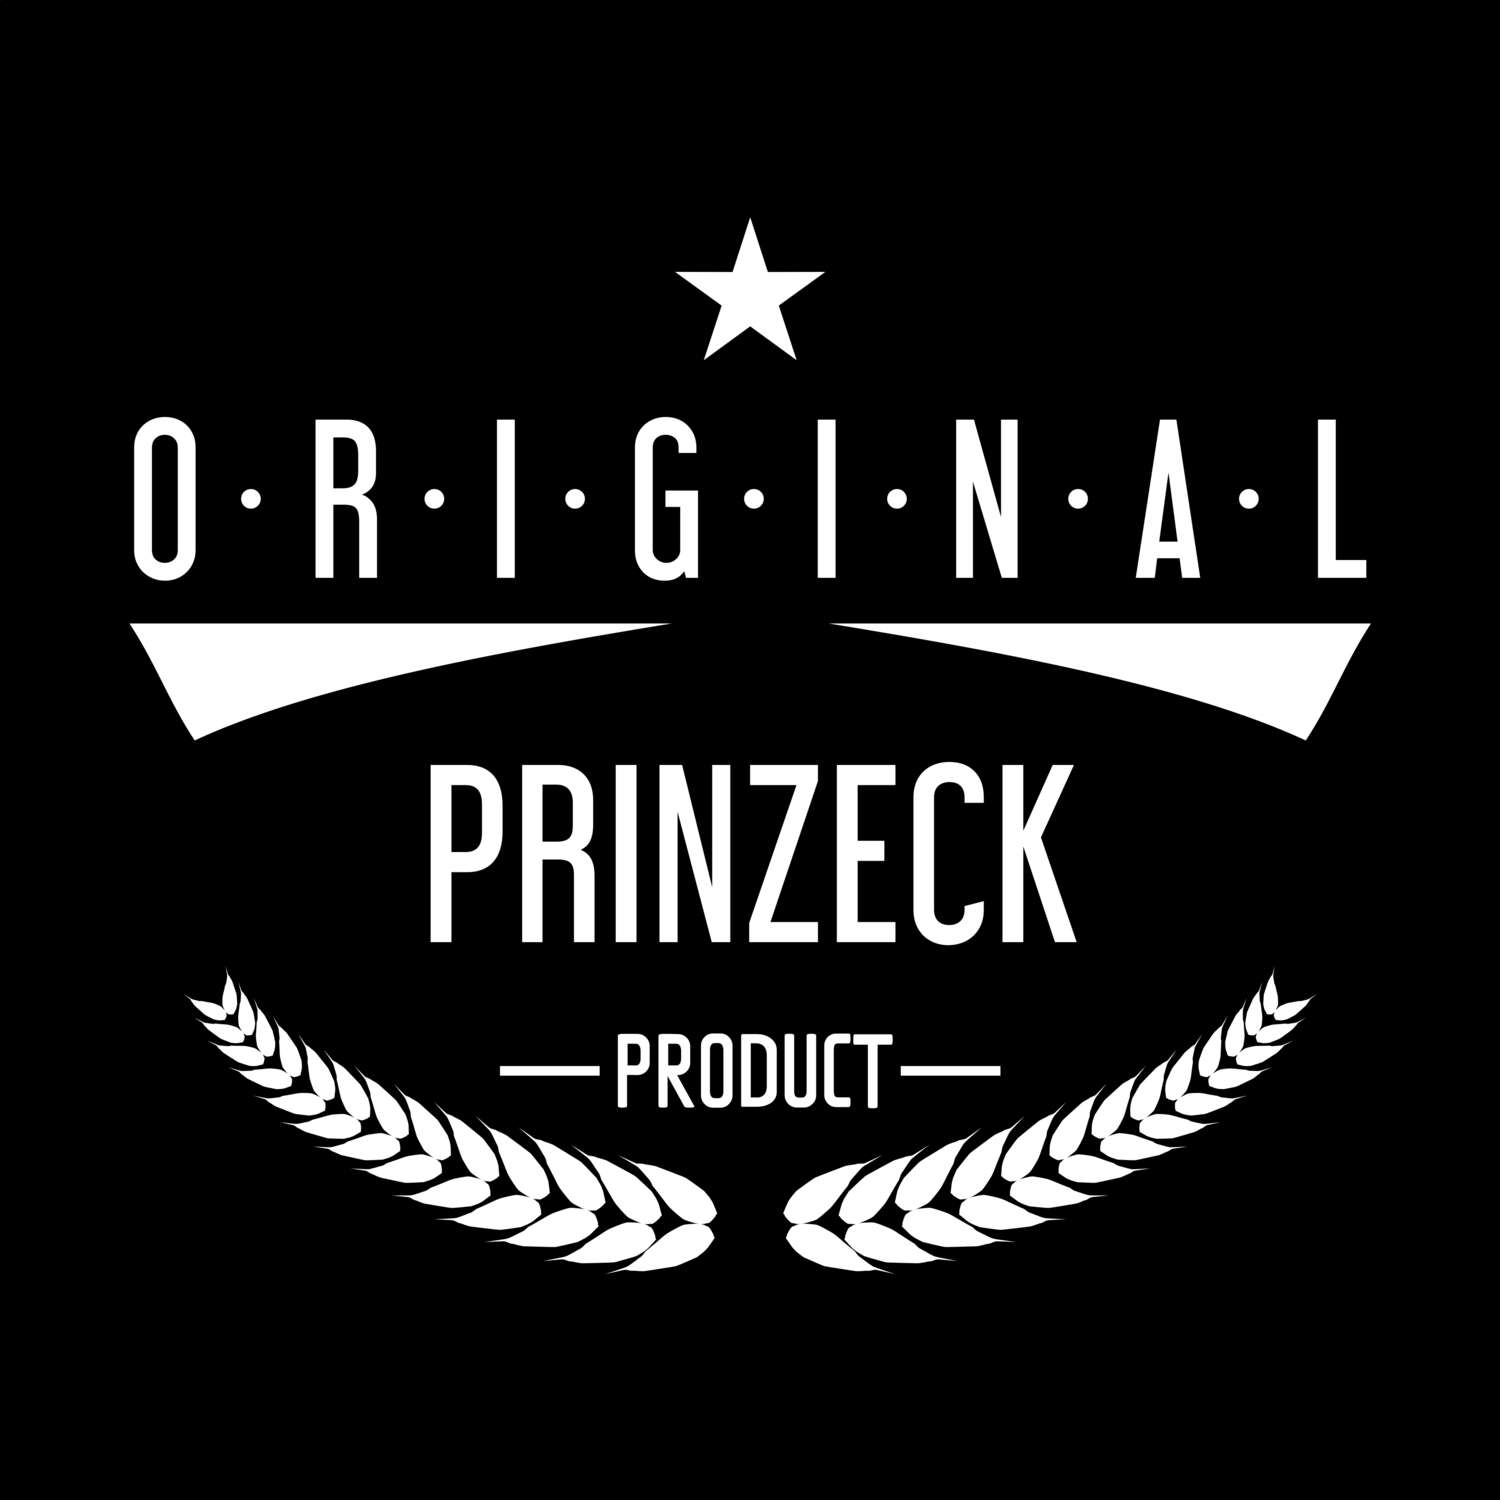 Prinzeck T-Shirt »Original Product«